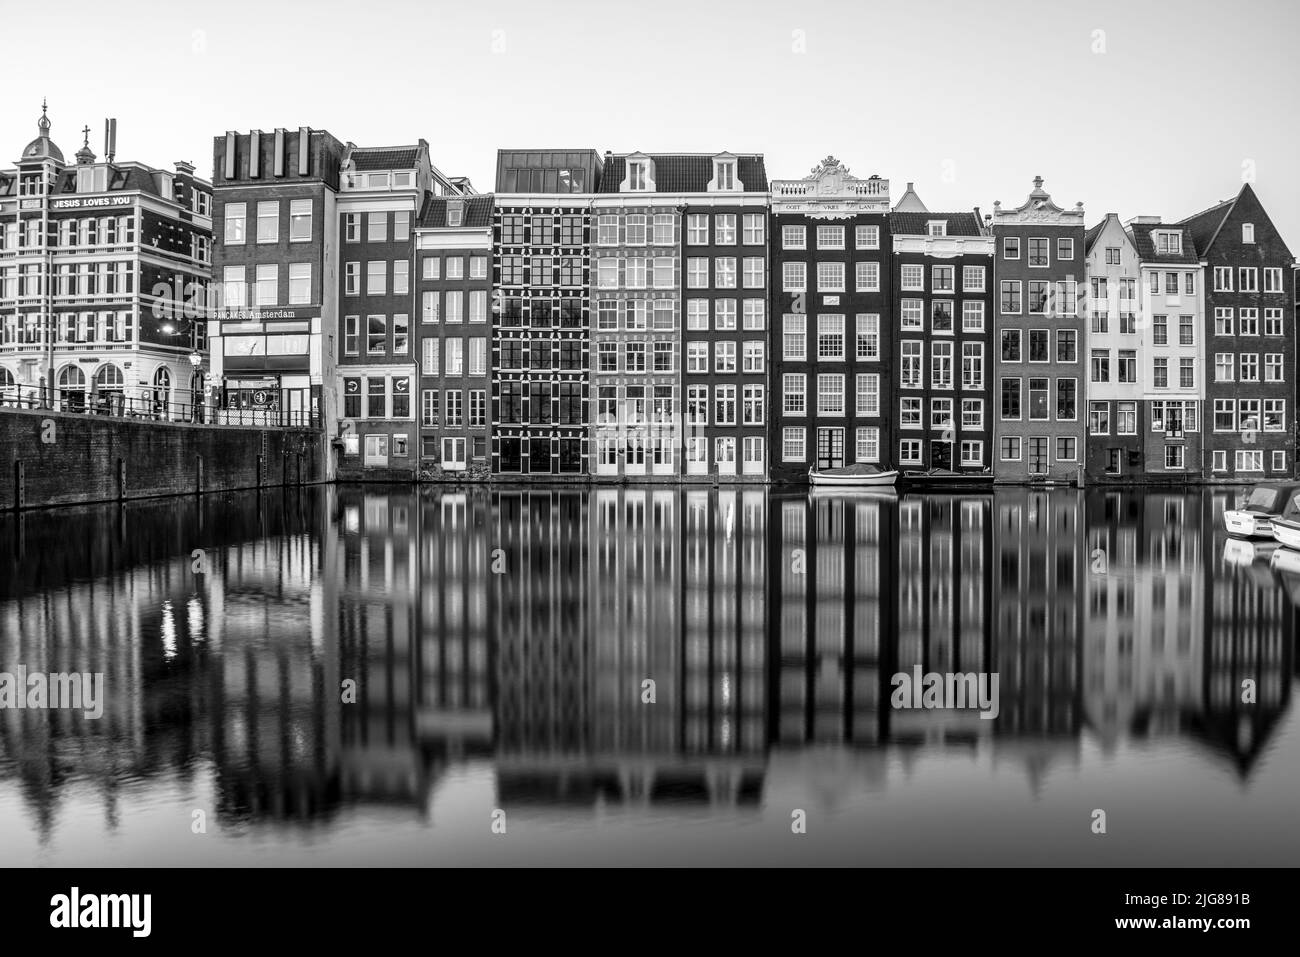 Characteristic houses, Damrak canal, Amsterdam, Netherlands Stock Photo